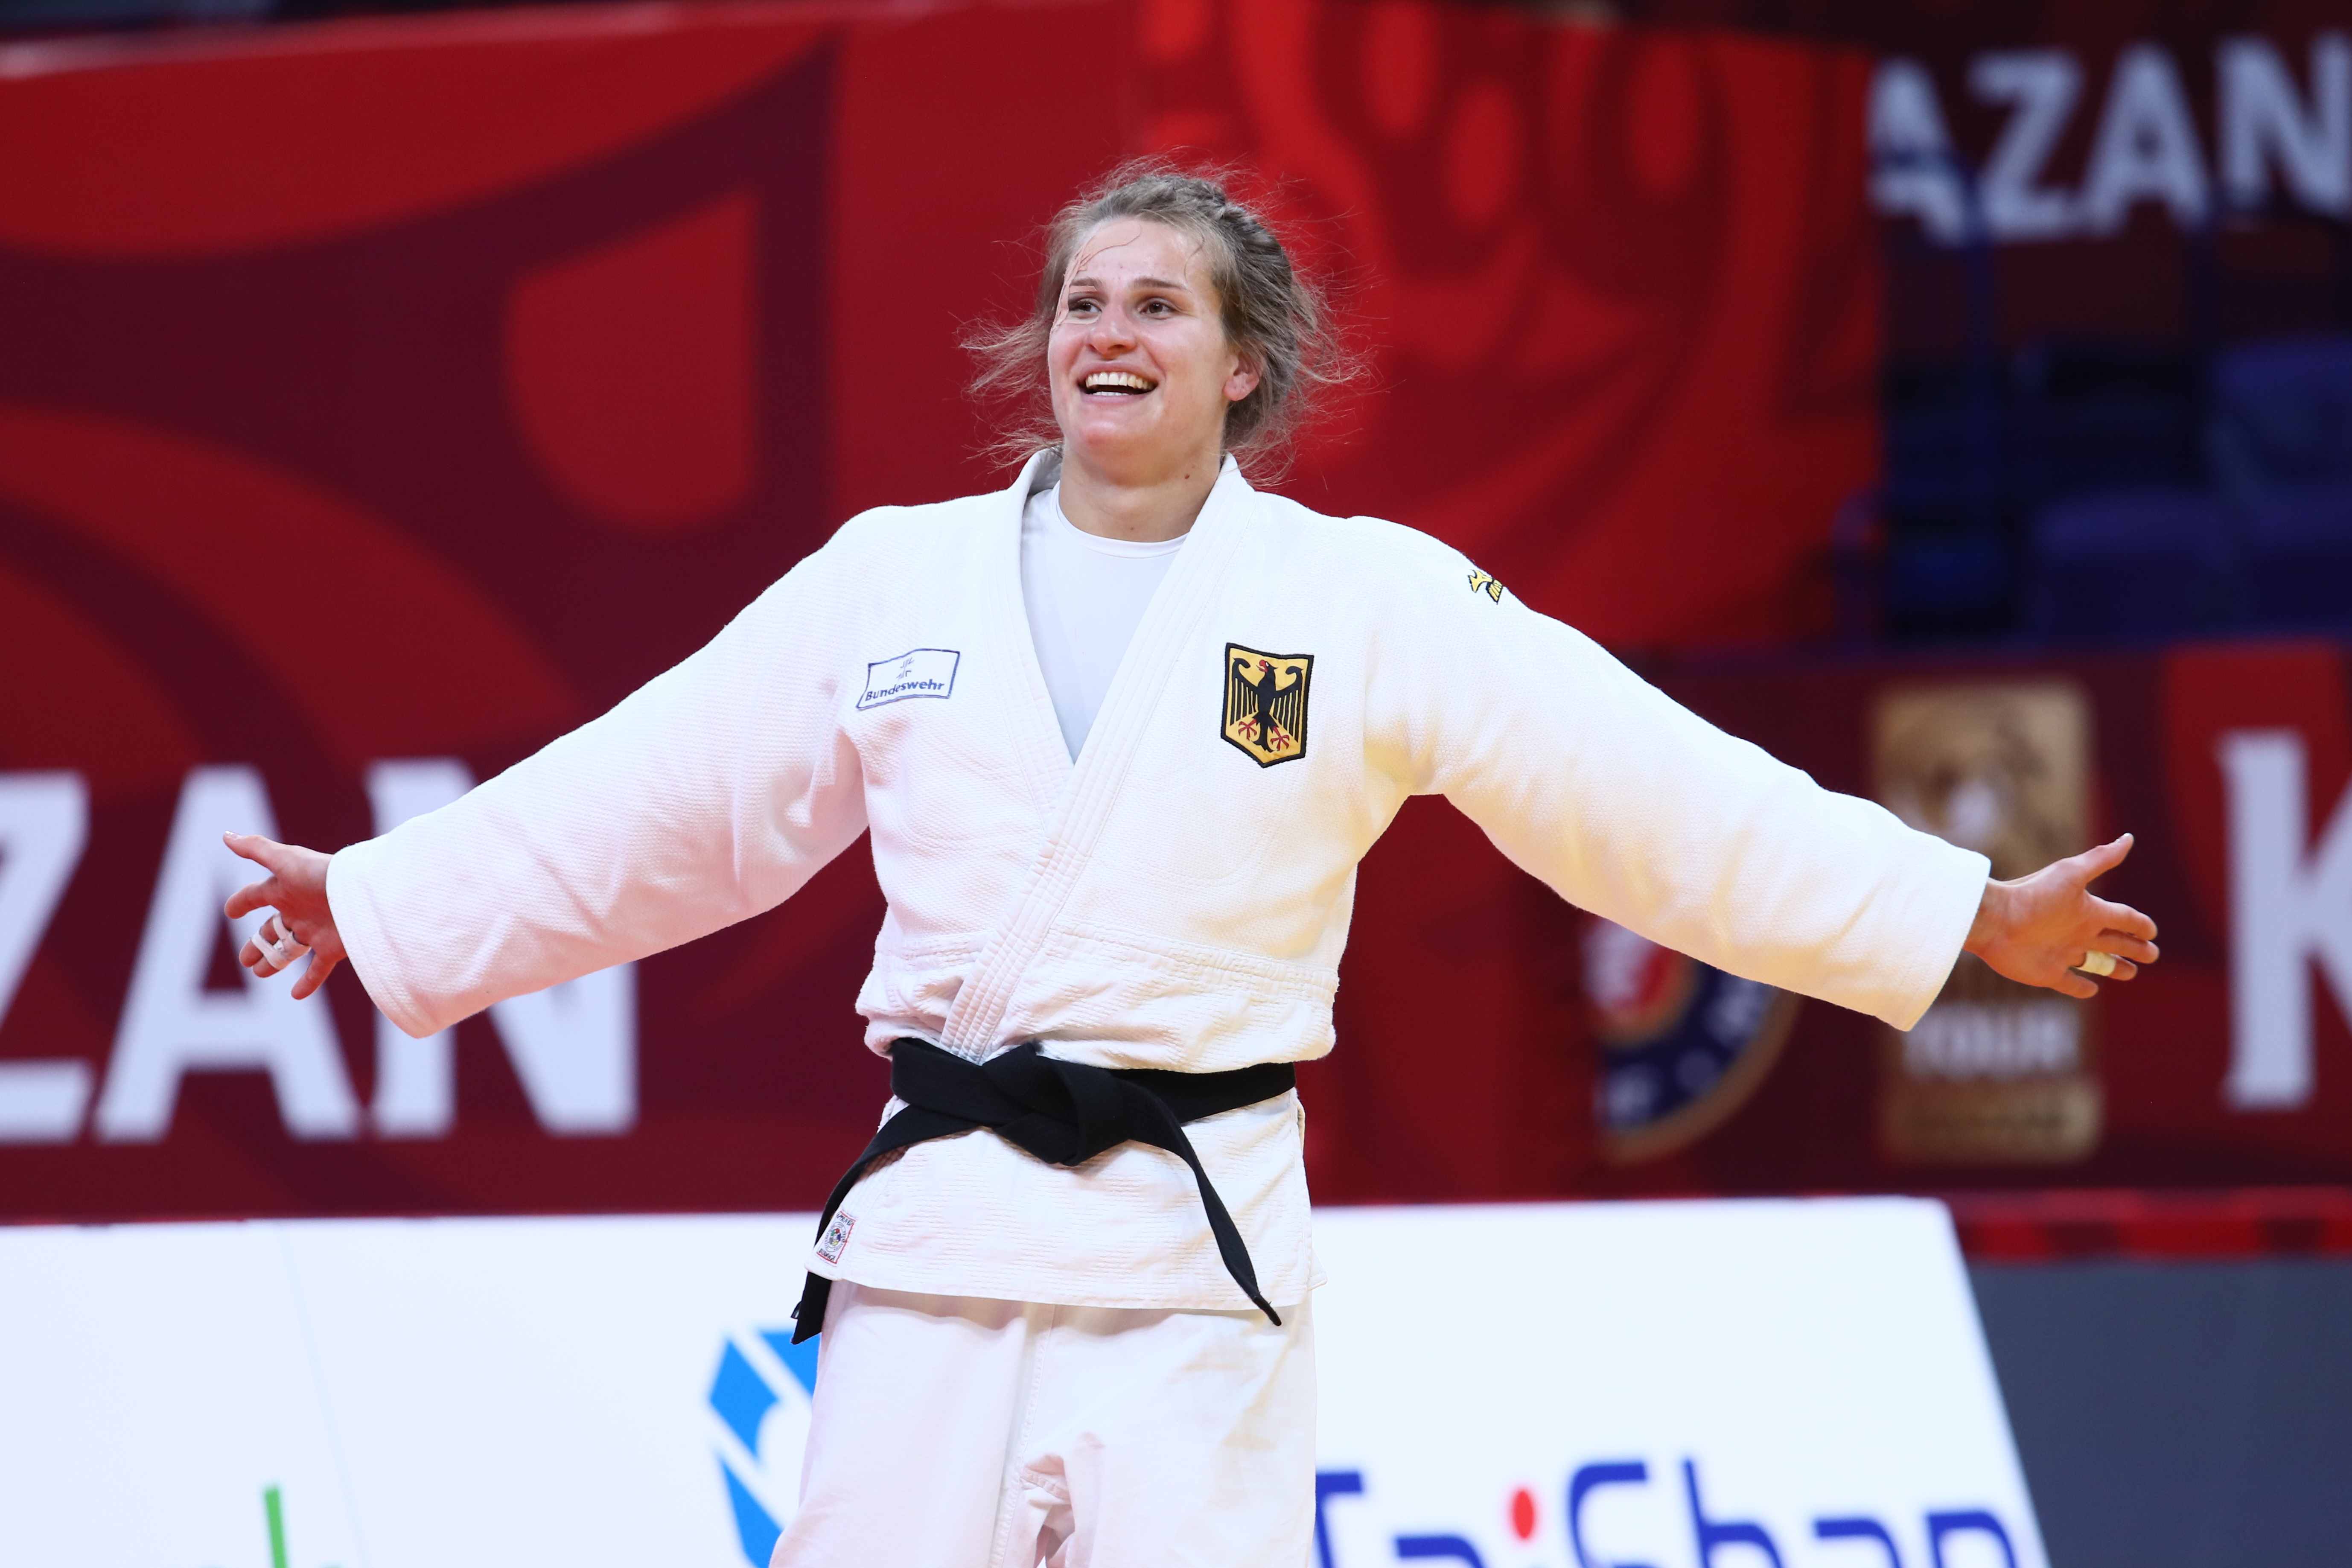 Judokas complete their performance at Kazan Grand Slam 2021